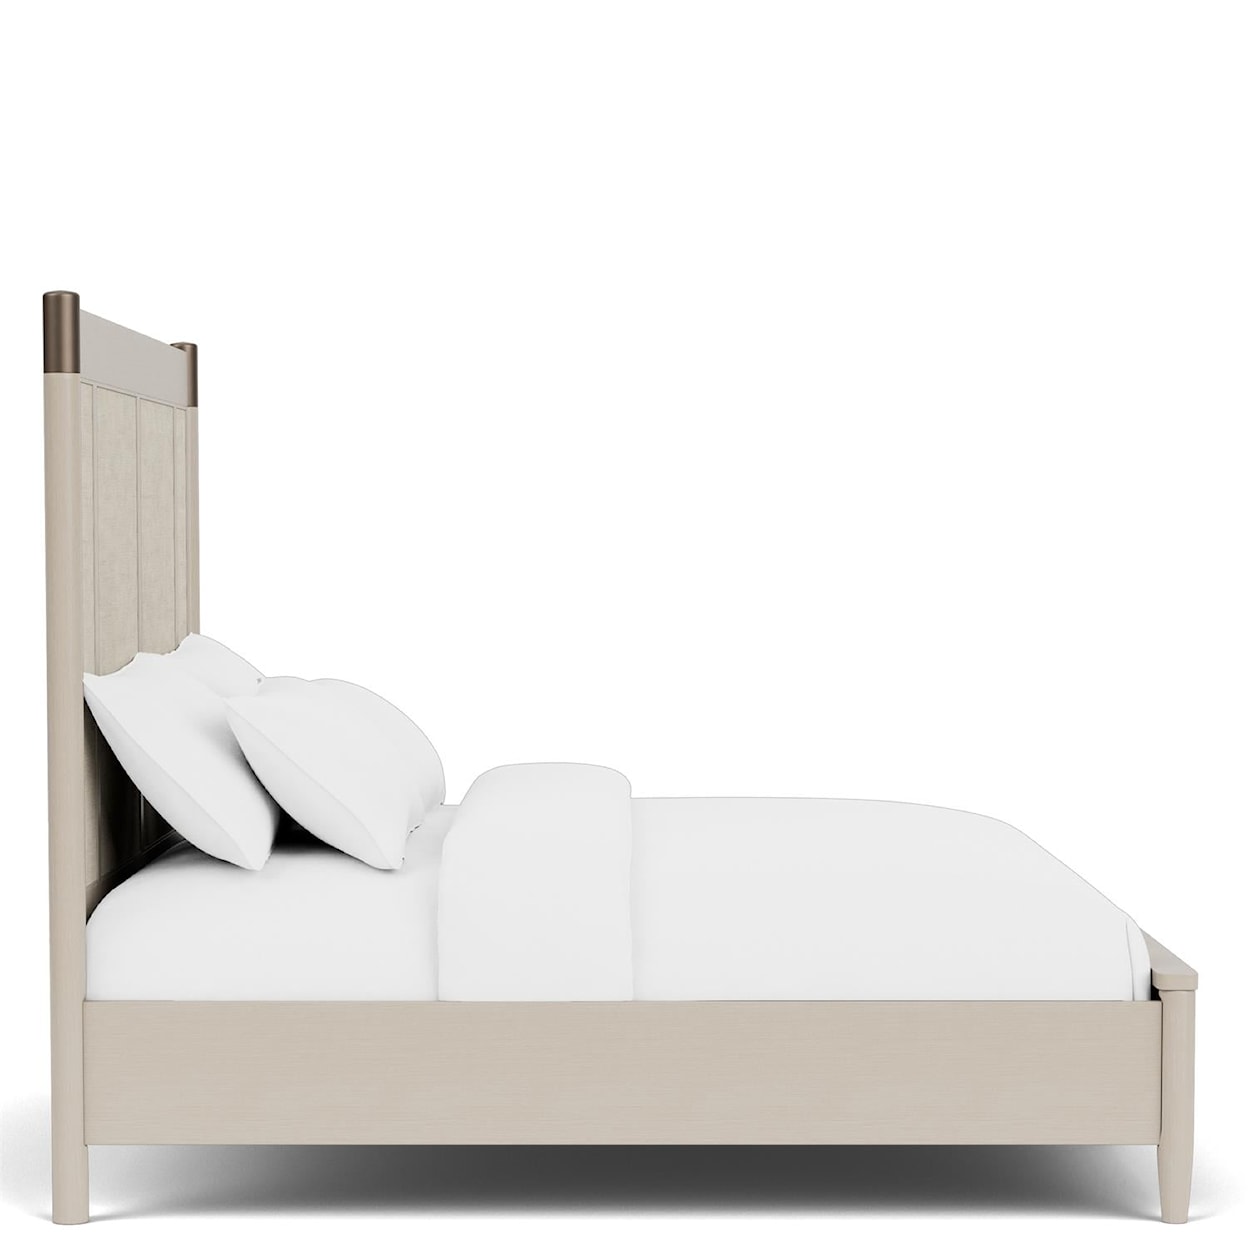 Riverside Furniture Laguna King Panel Bed with Footboard Storage